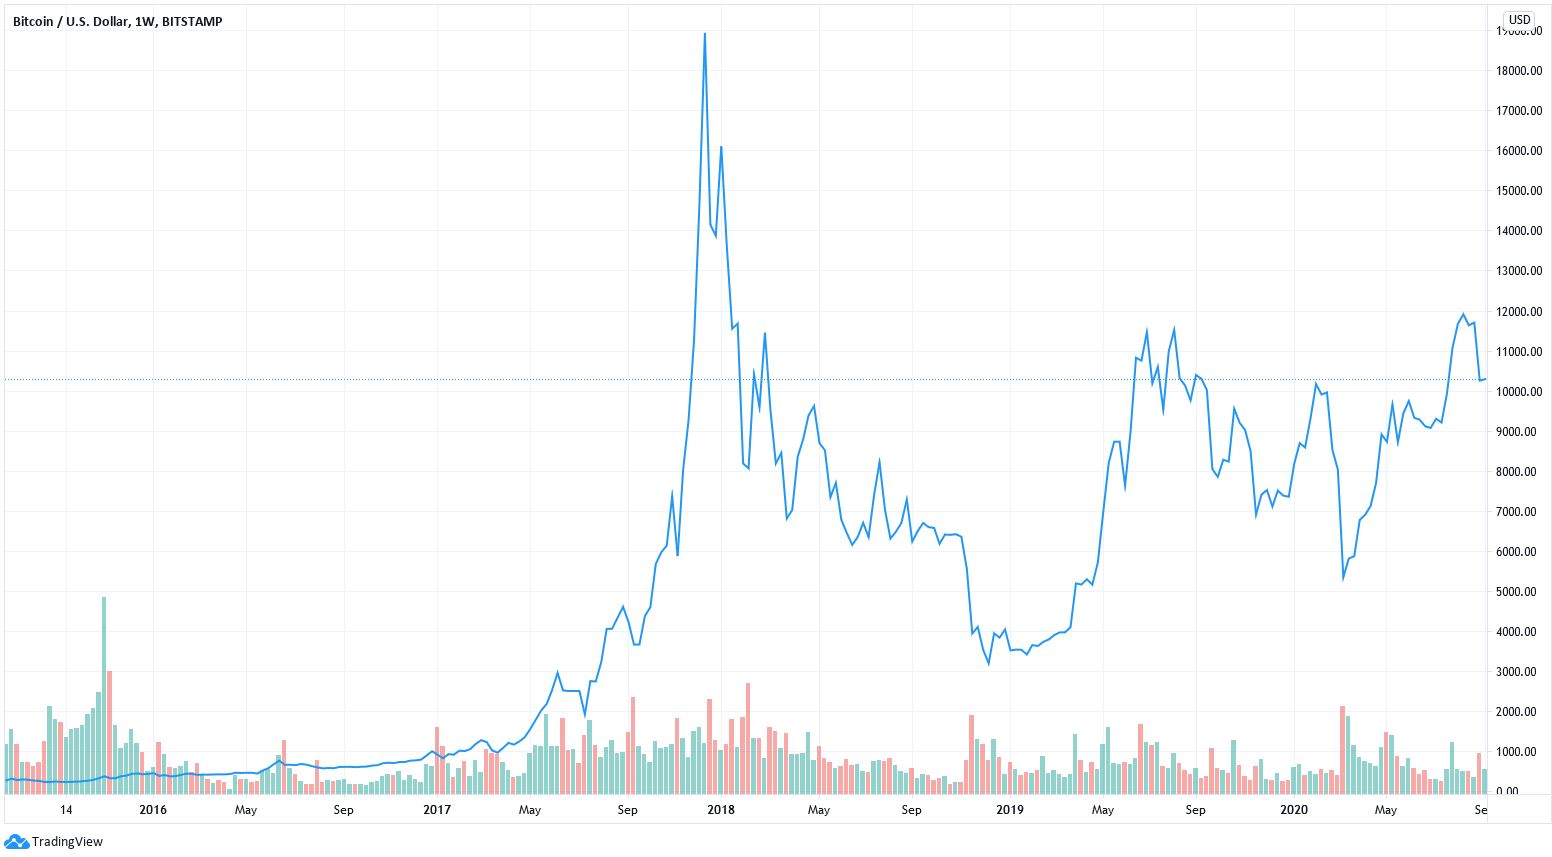 5 year bitcoin price chart